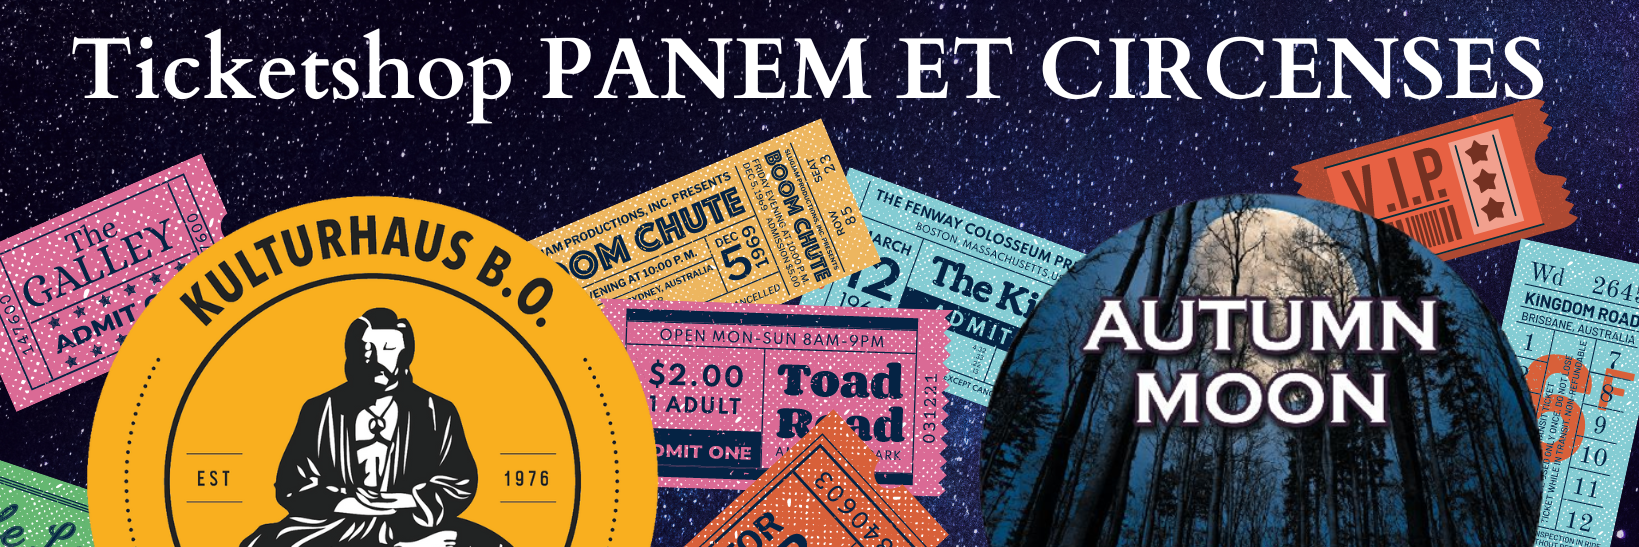 Panem Et Circenses Ticket Shop